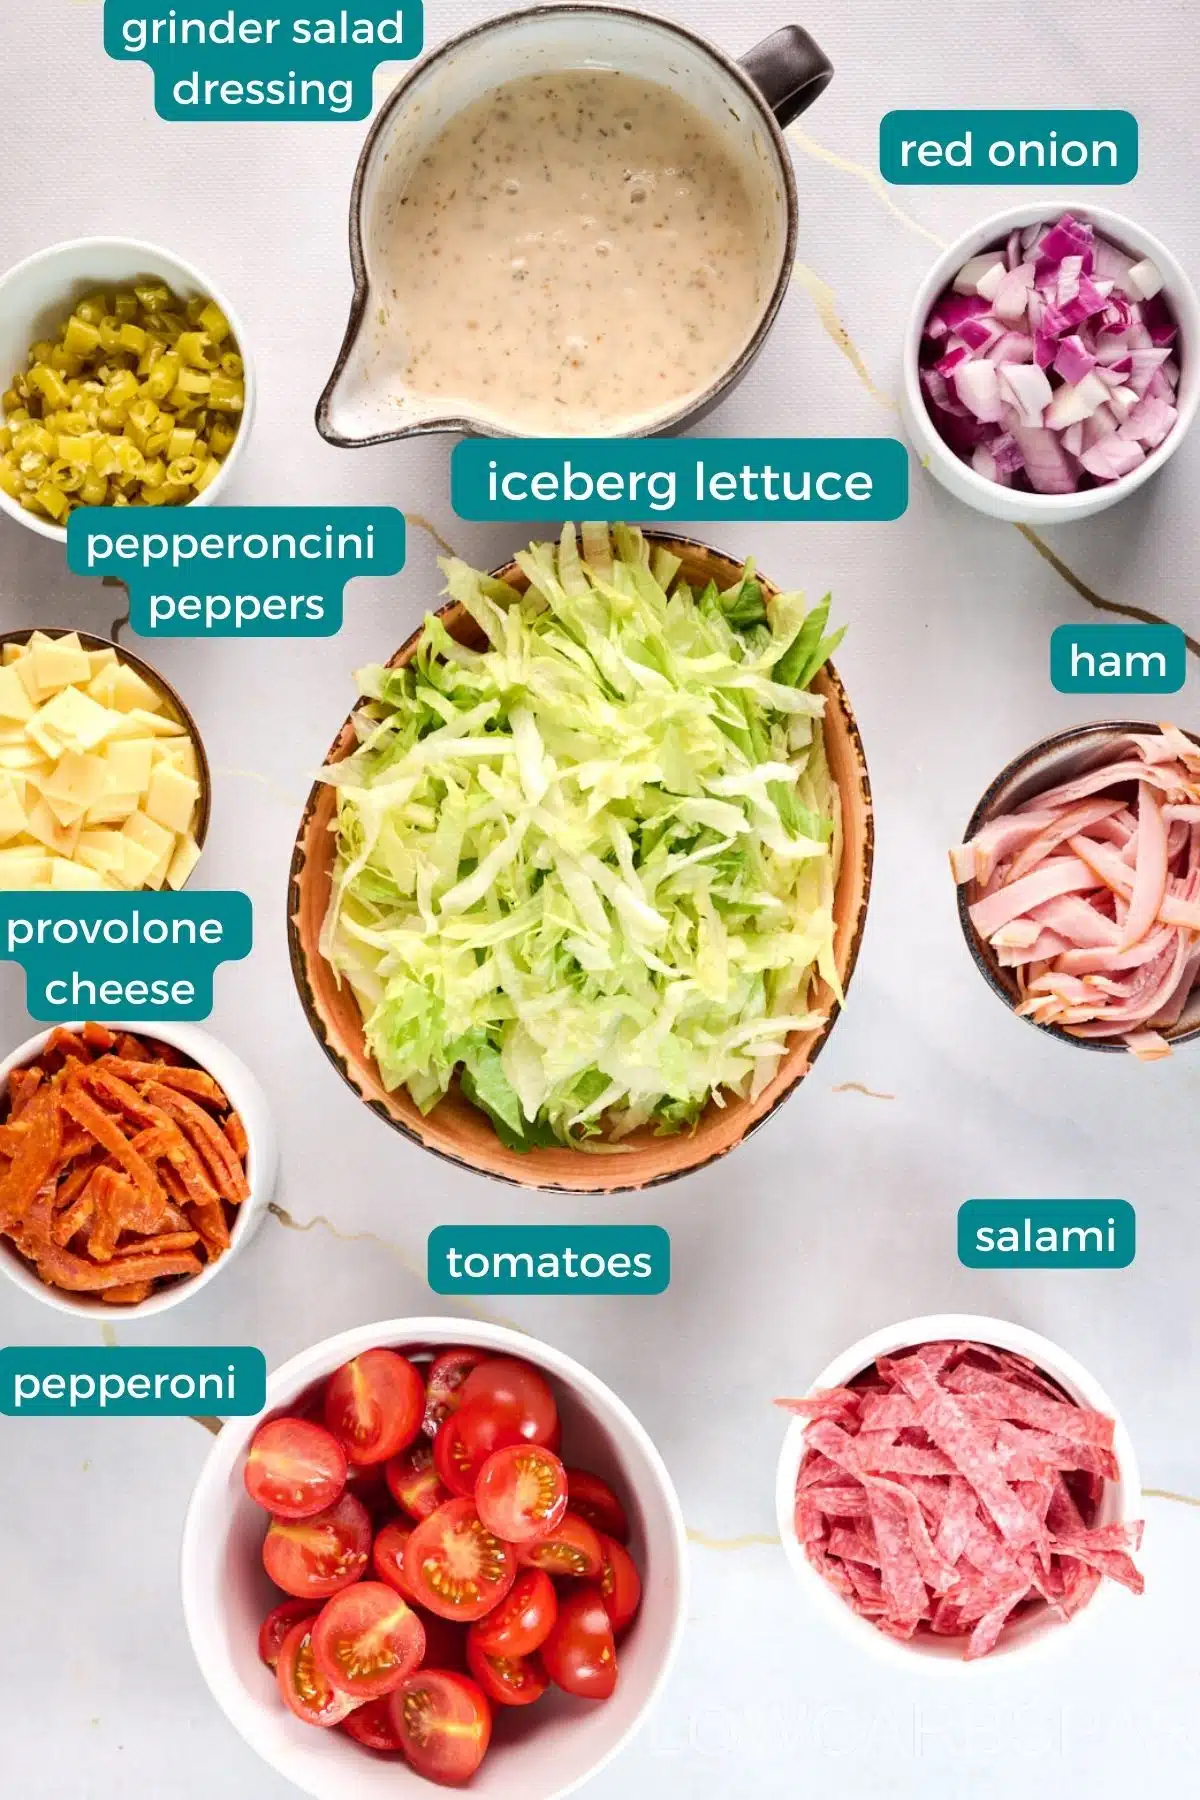 Grinder Salad Ingredients